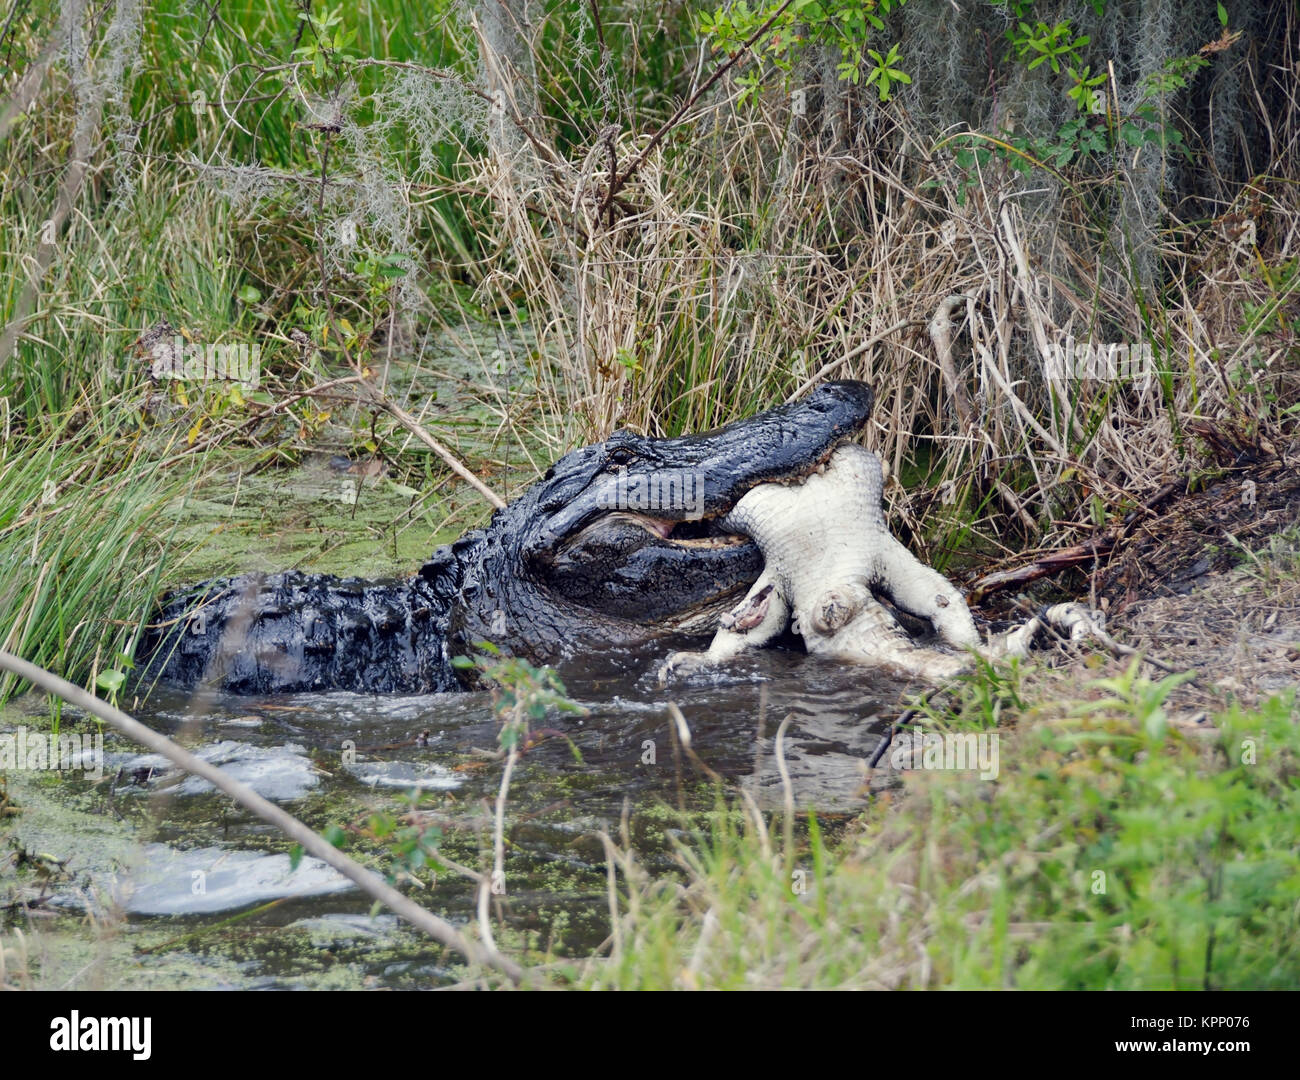 Large Florida Alligator Eating an Alligator Stock Photo - Alamy